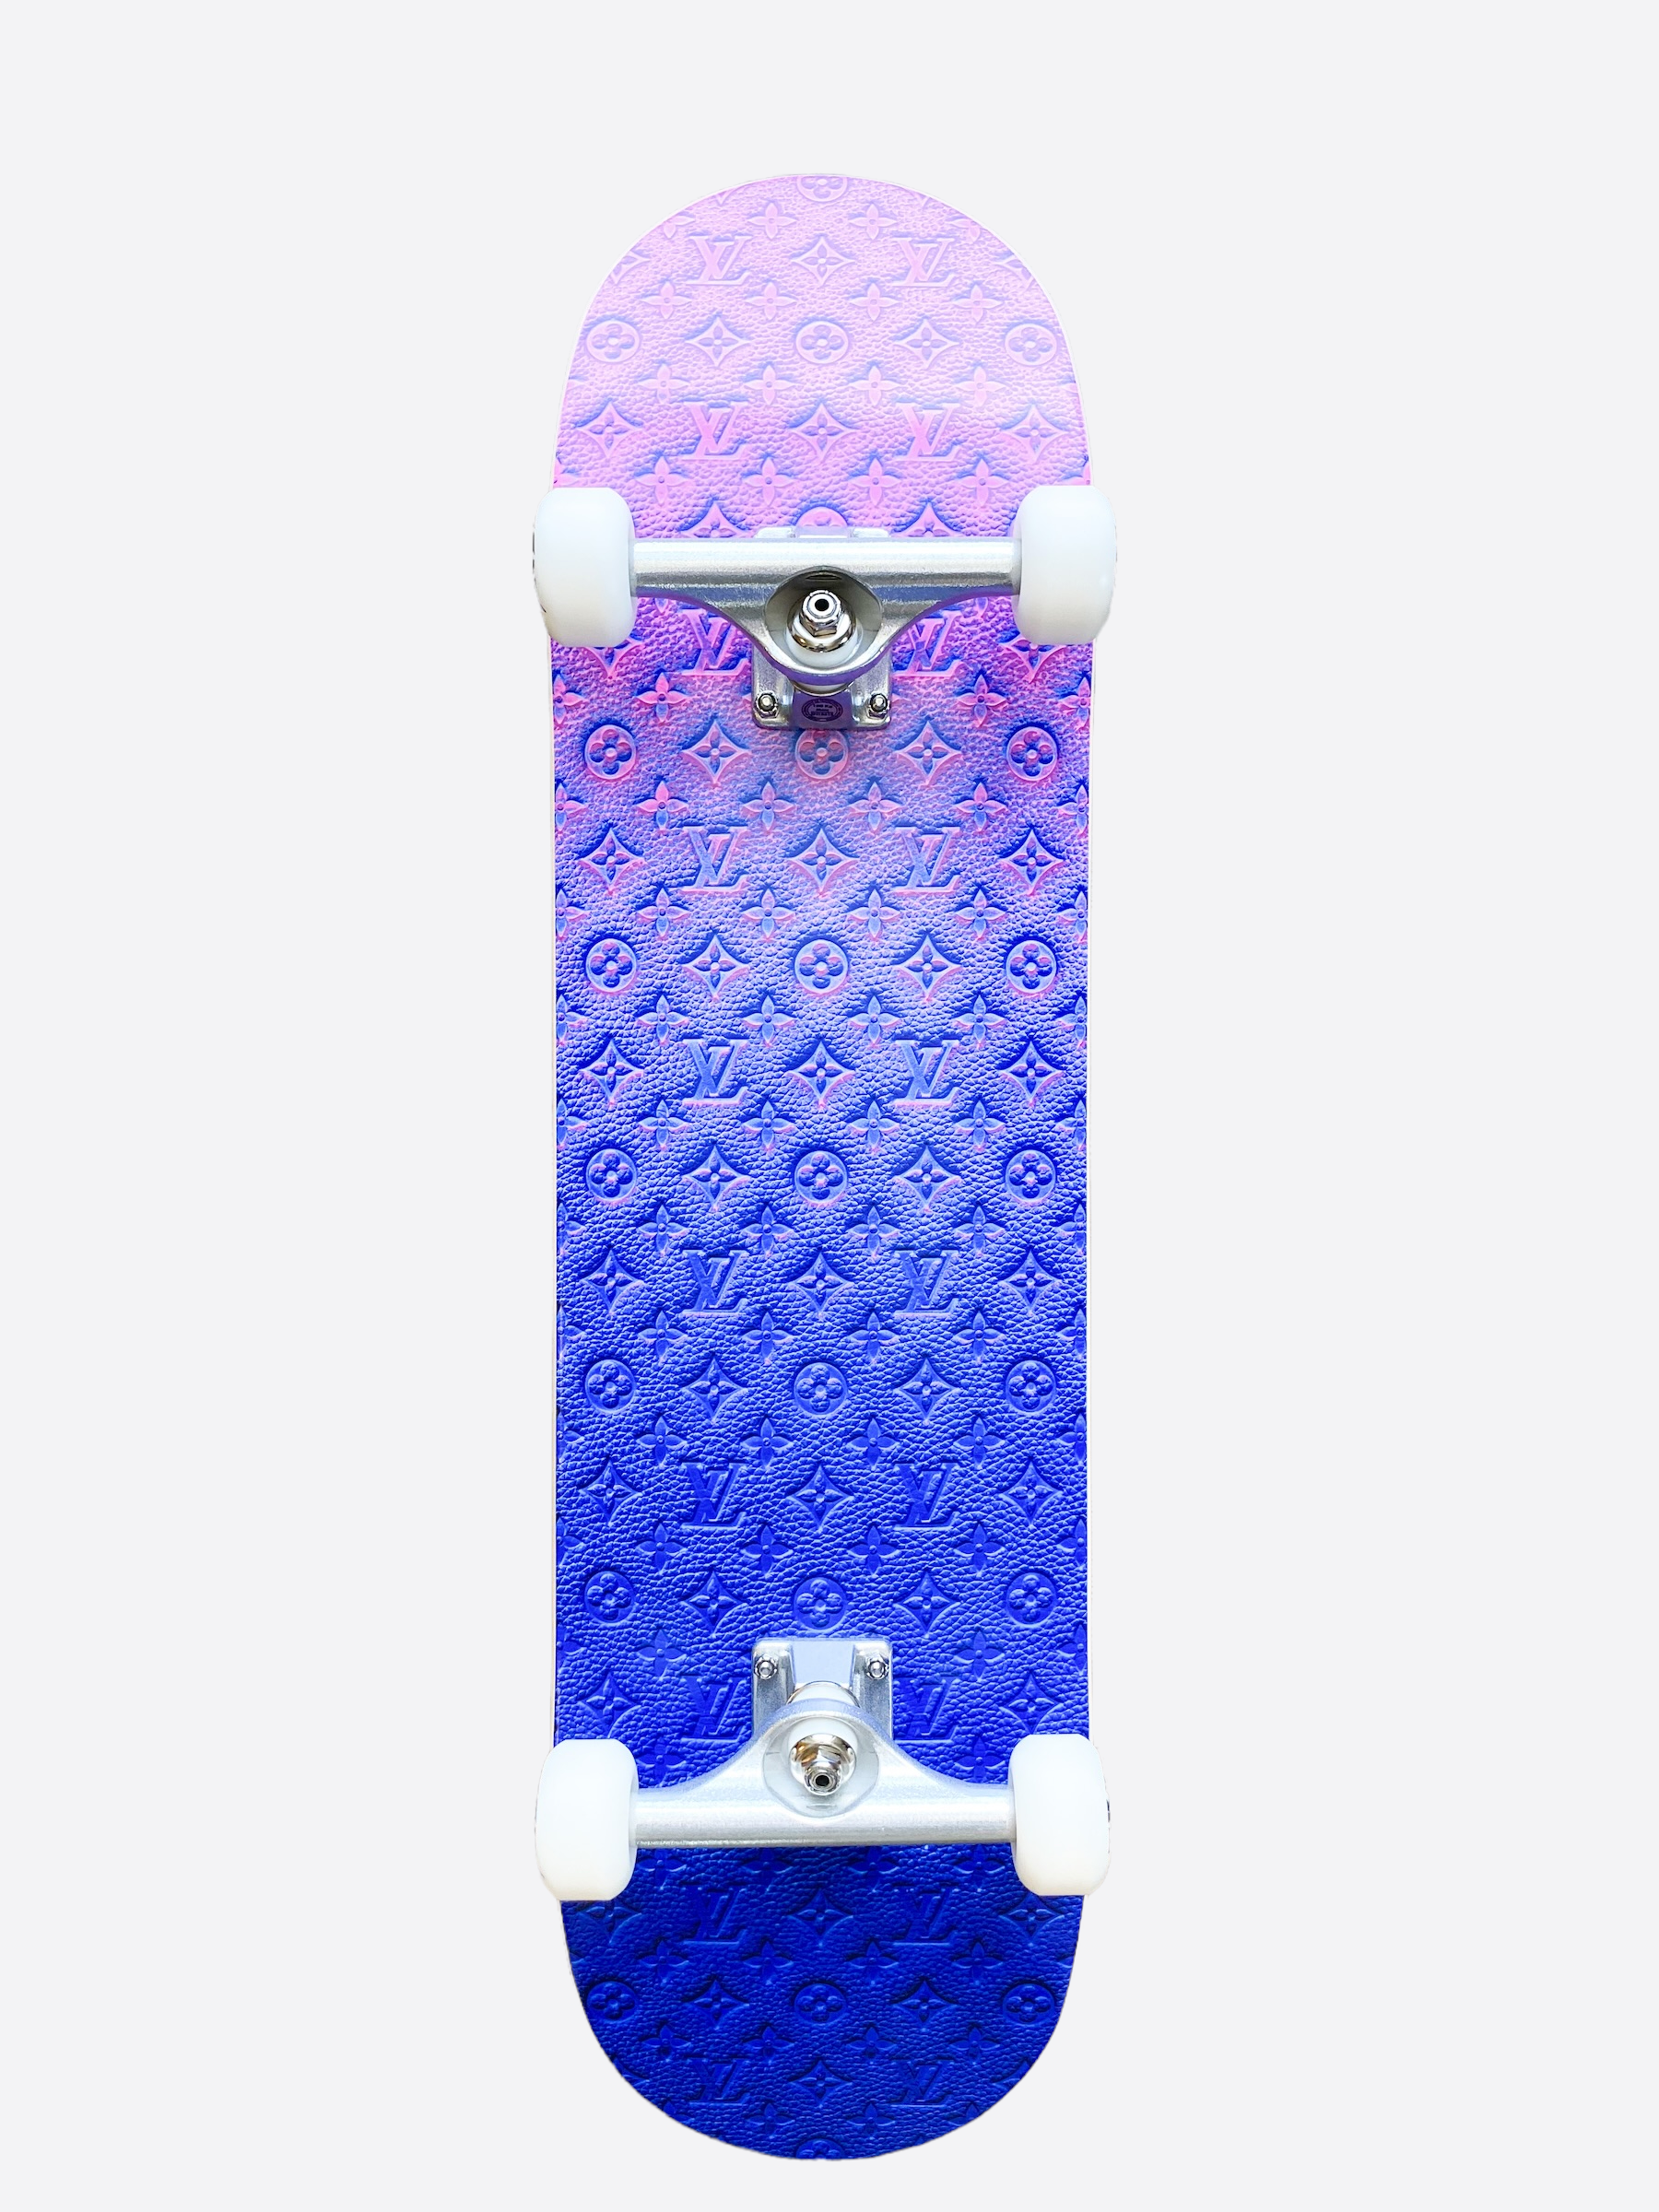 Louis Vuitton Skateboard Tape